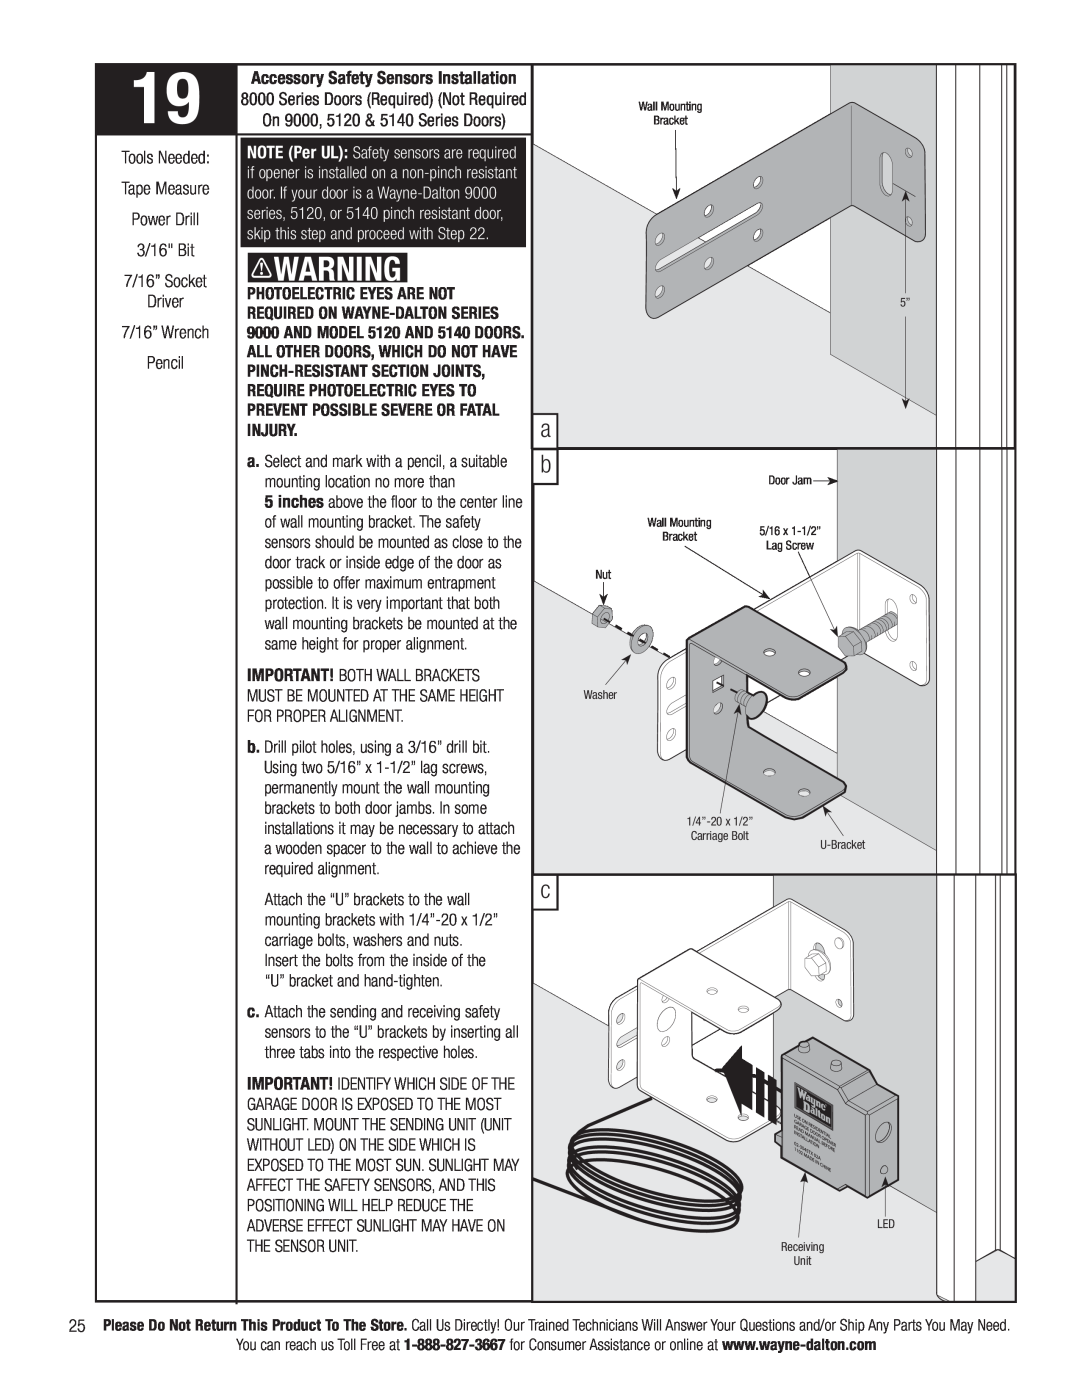 Wayne-Dalton 3663-372 installation instructions Accessory Safety Sensors Installation 